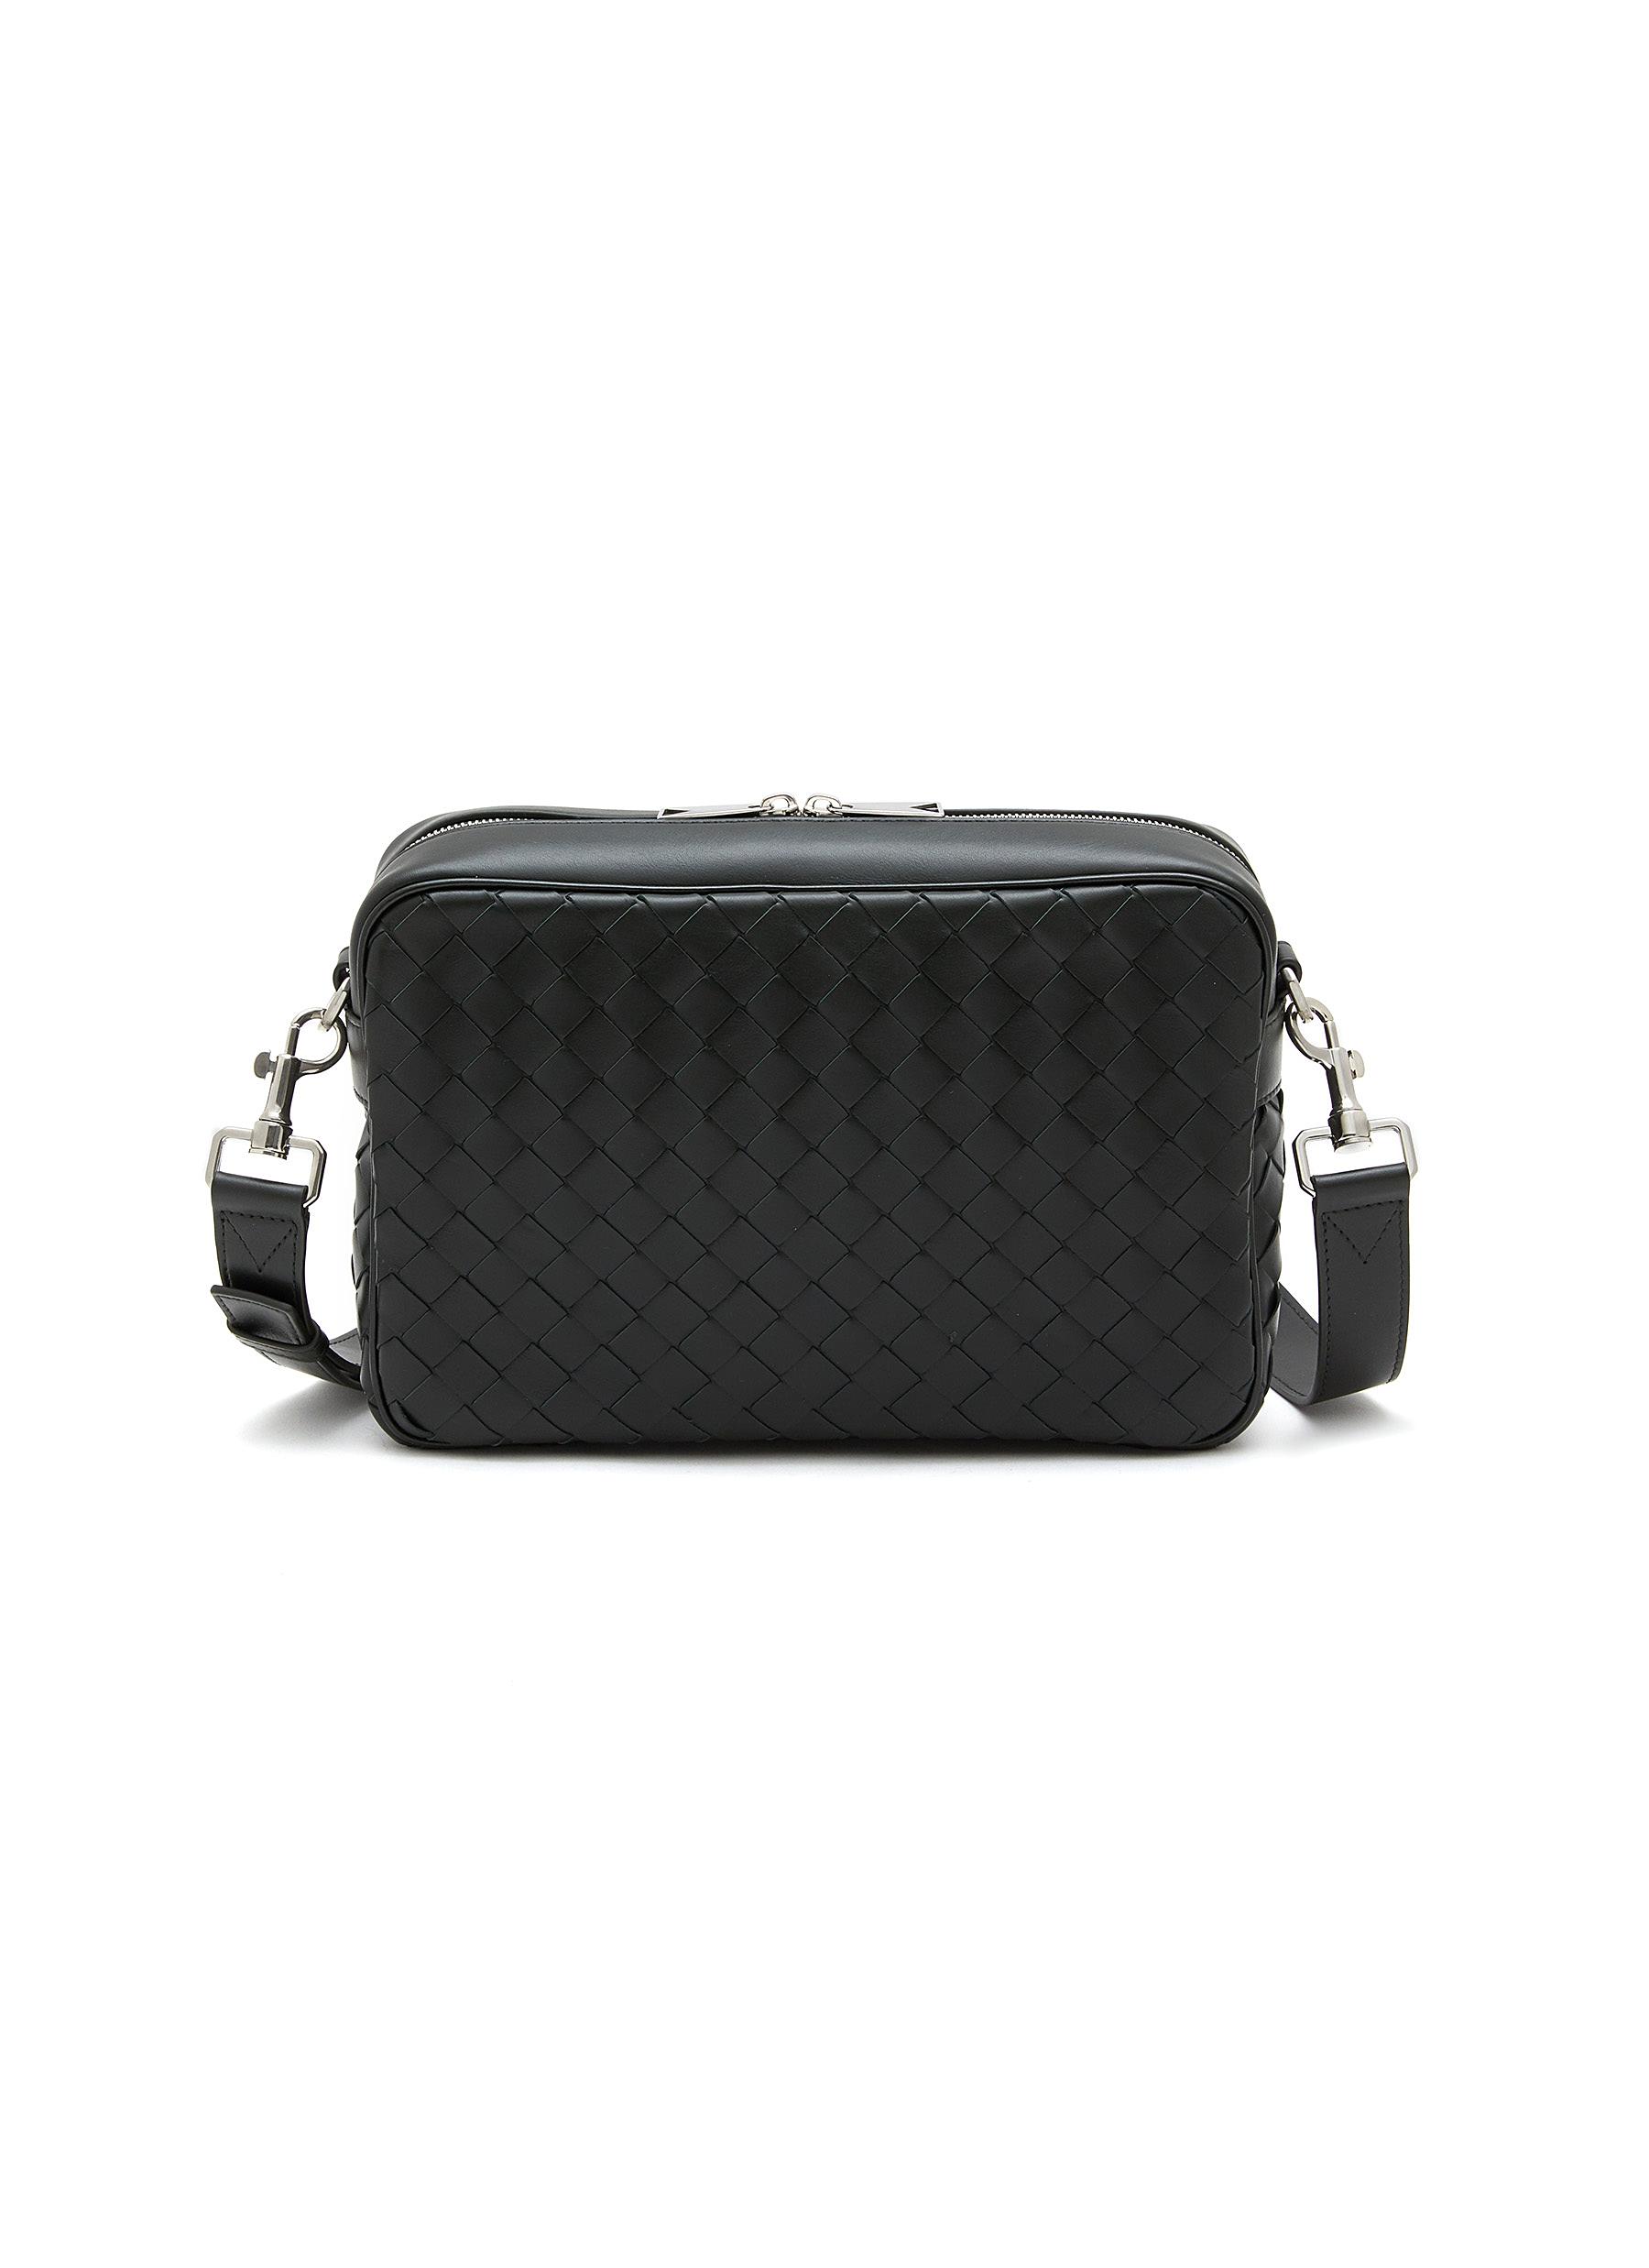 Bottega Veneta Men's Leather Intrecciato Crossbody Camera Bag, black-silver, Men's, Crossbody Bags Messenger Bags & Camera Bags